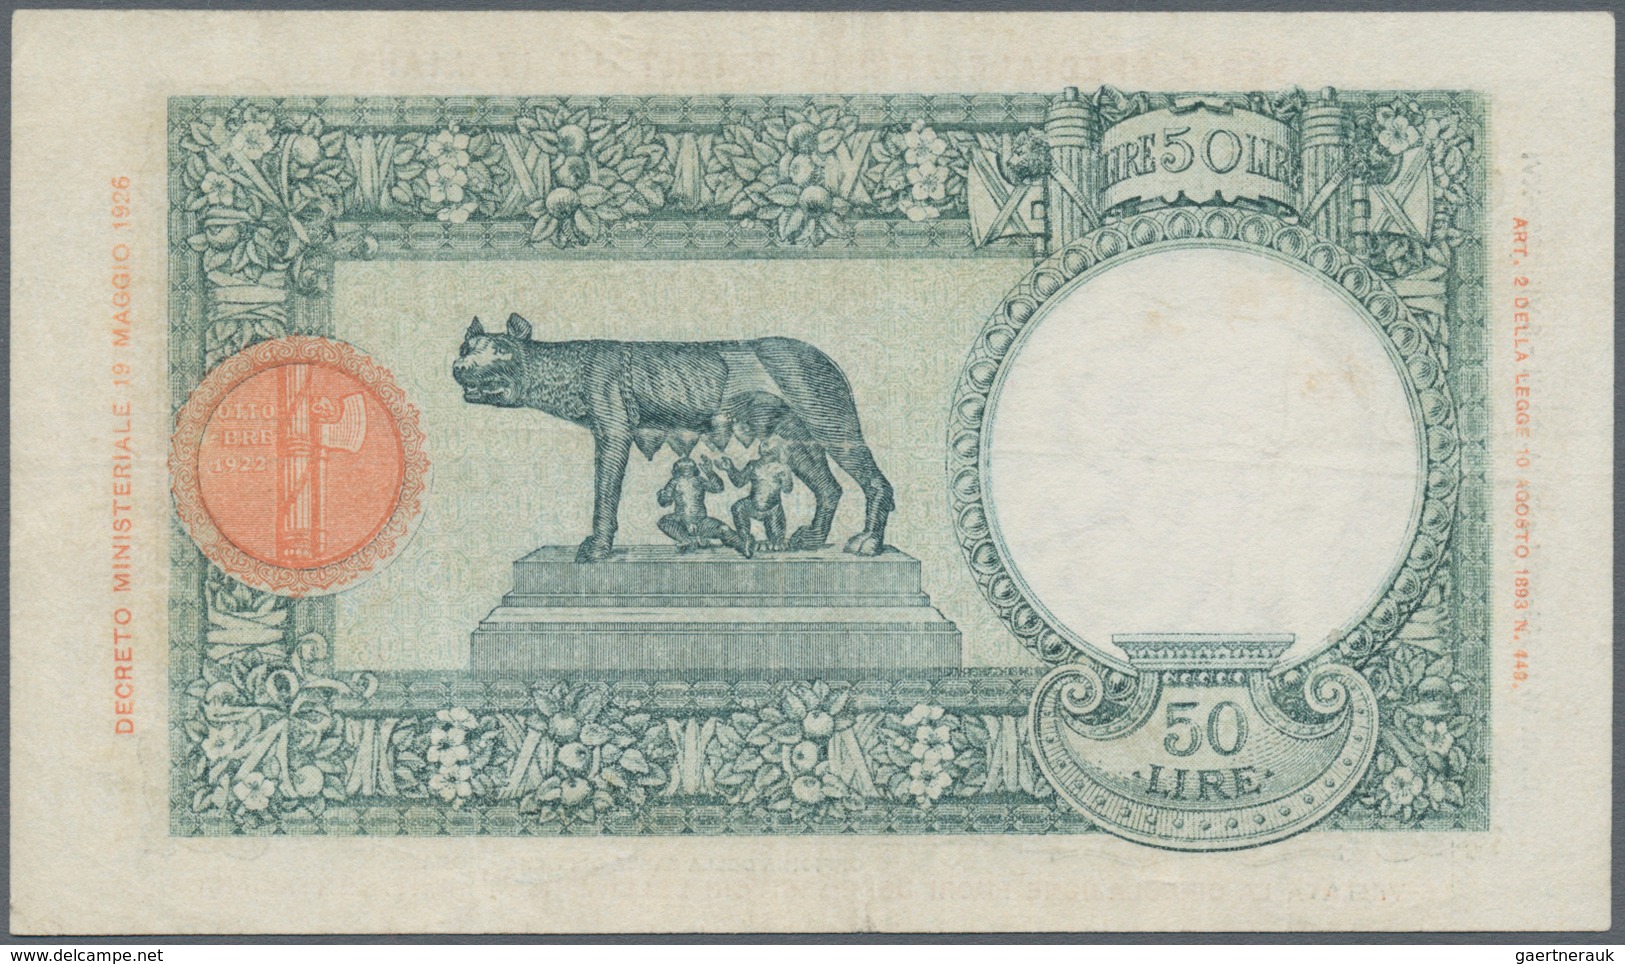 Italian East Africa / Italienisch Ost-Afrika: 50 Lire 1939 P. 1, Light Vertial And Horizontal Folds - Italienisch Ostafrika